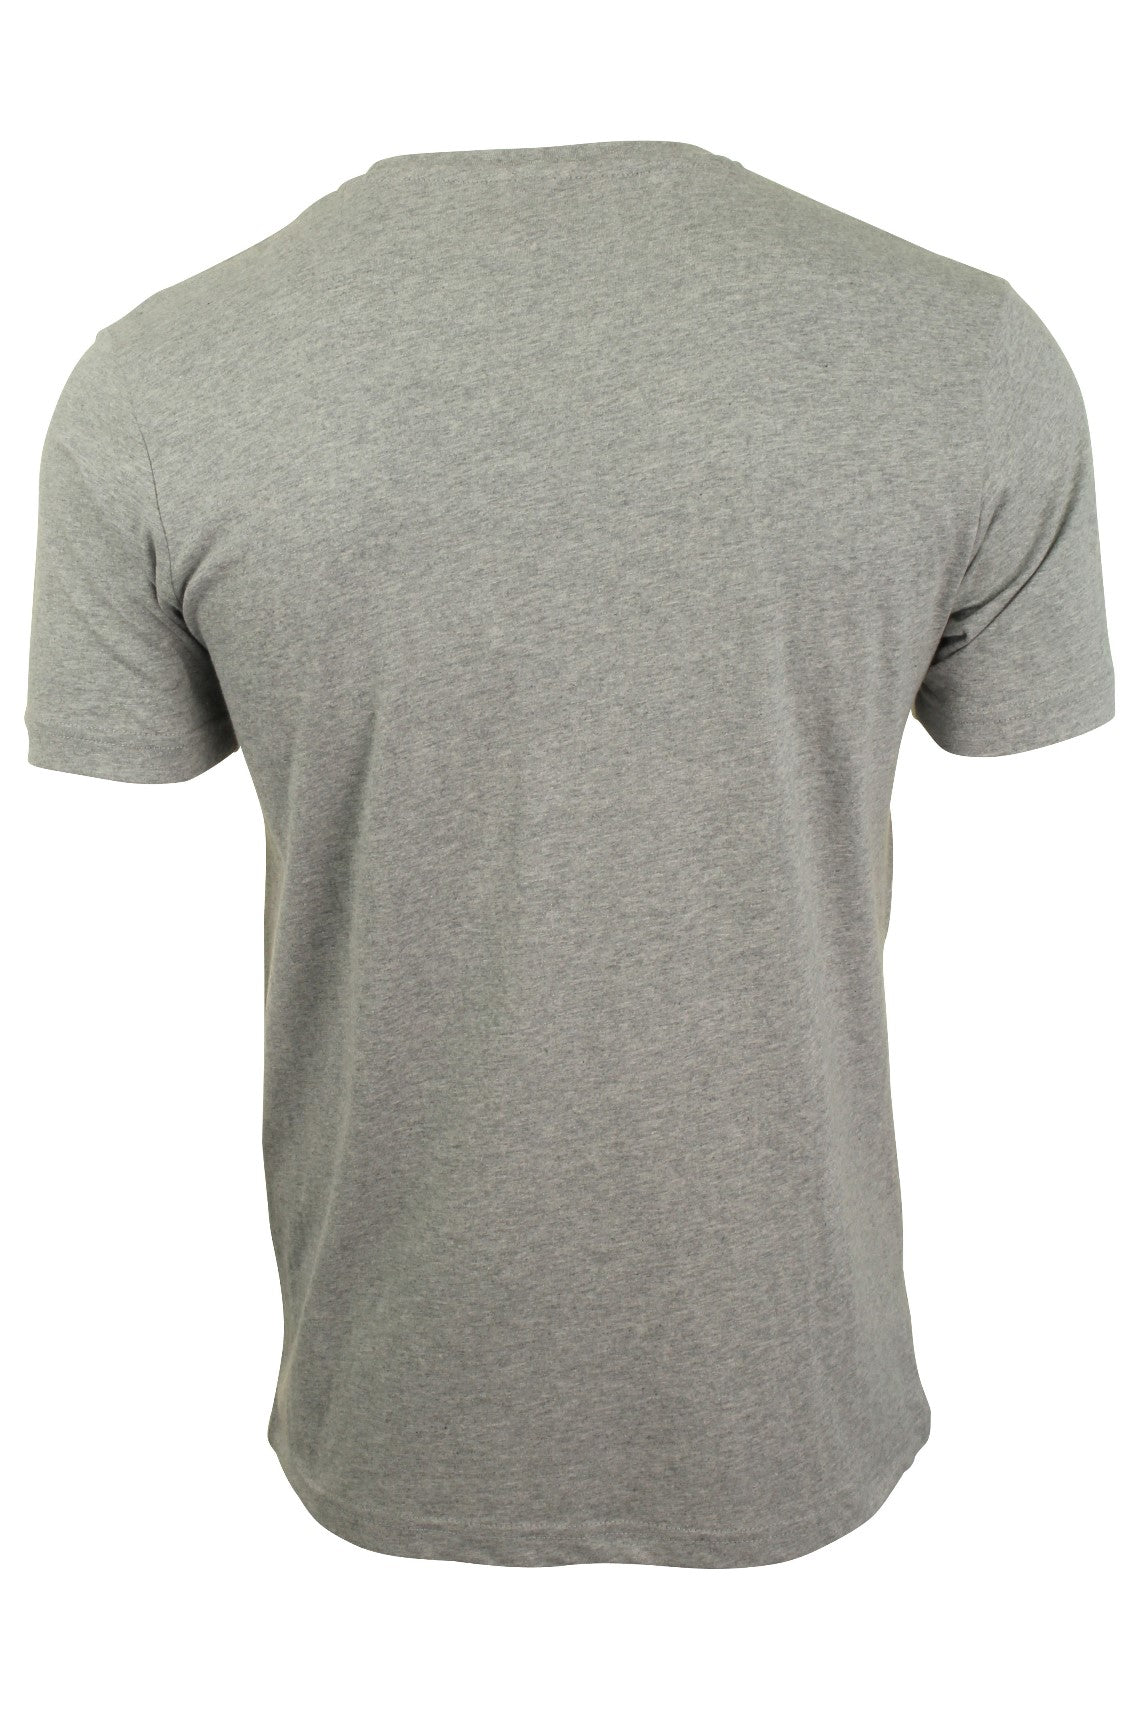 Mens Ellesse T-Shirt 'Canaletto' Short Sleeved, 03, Shs04548, Athletic Grey